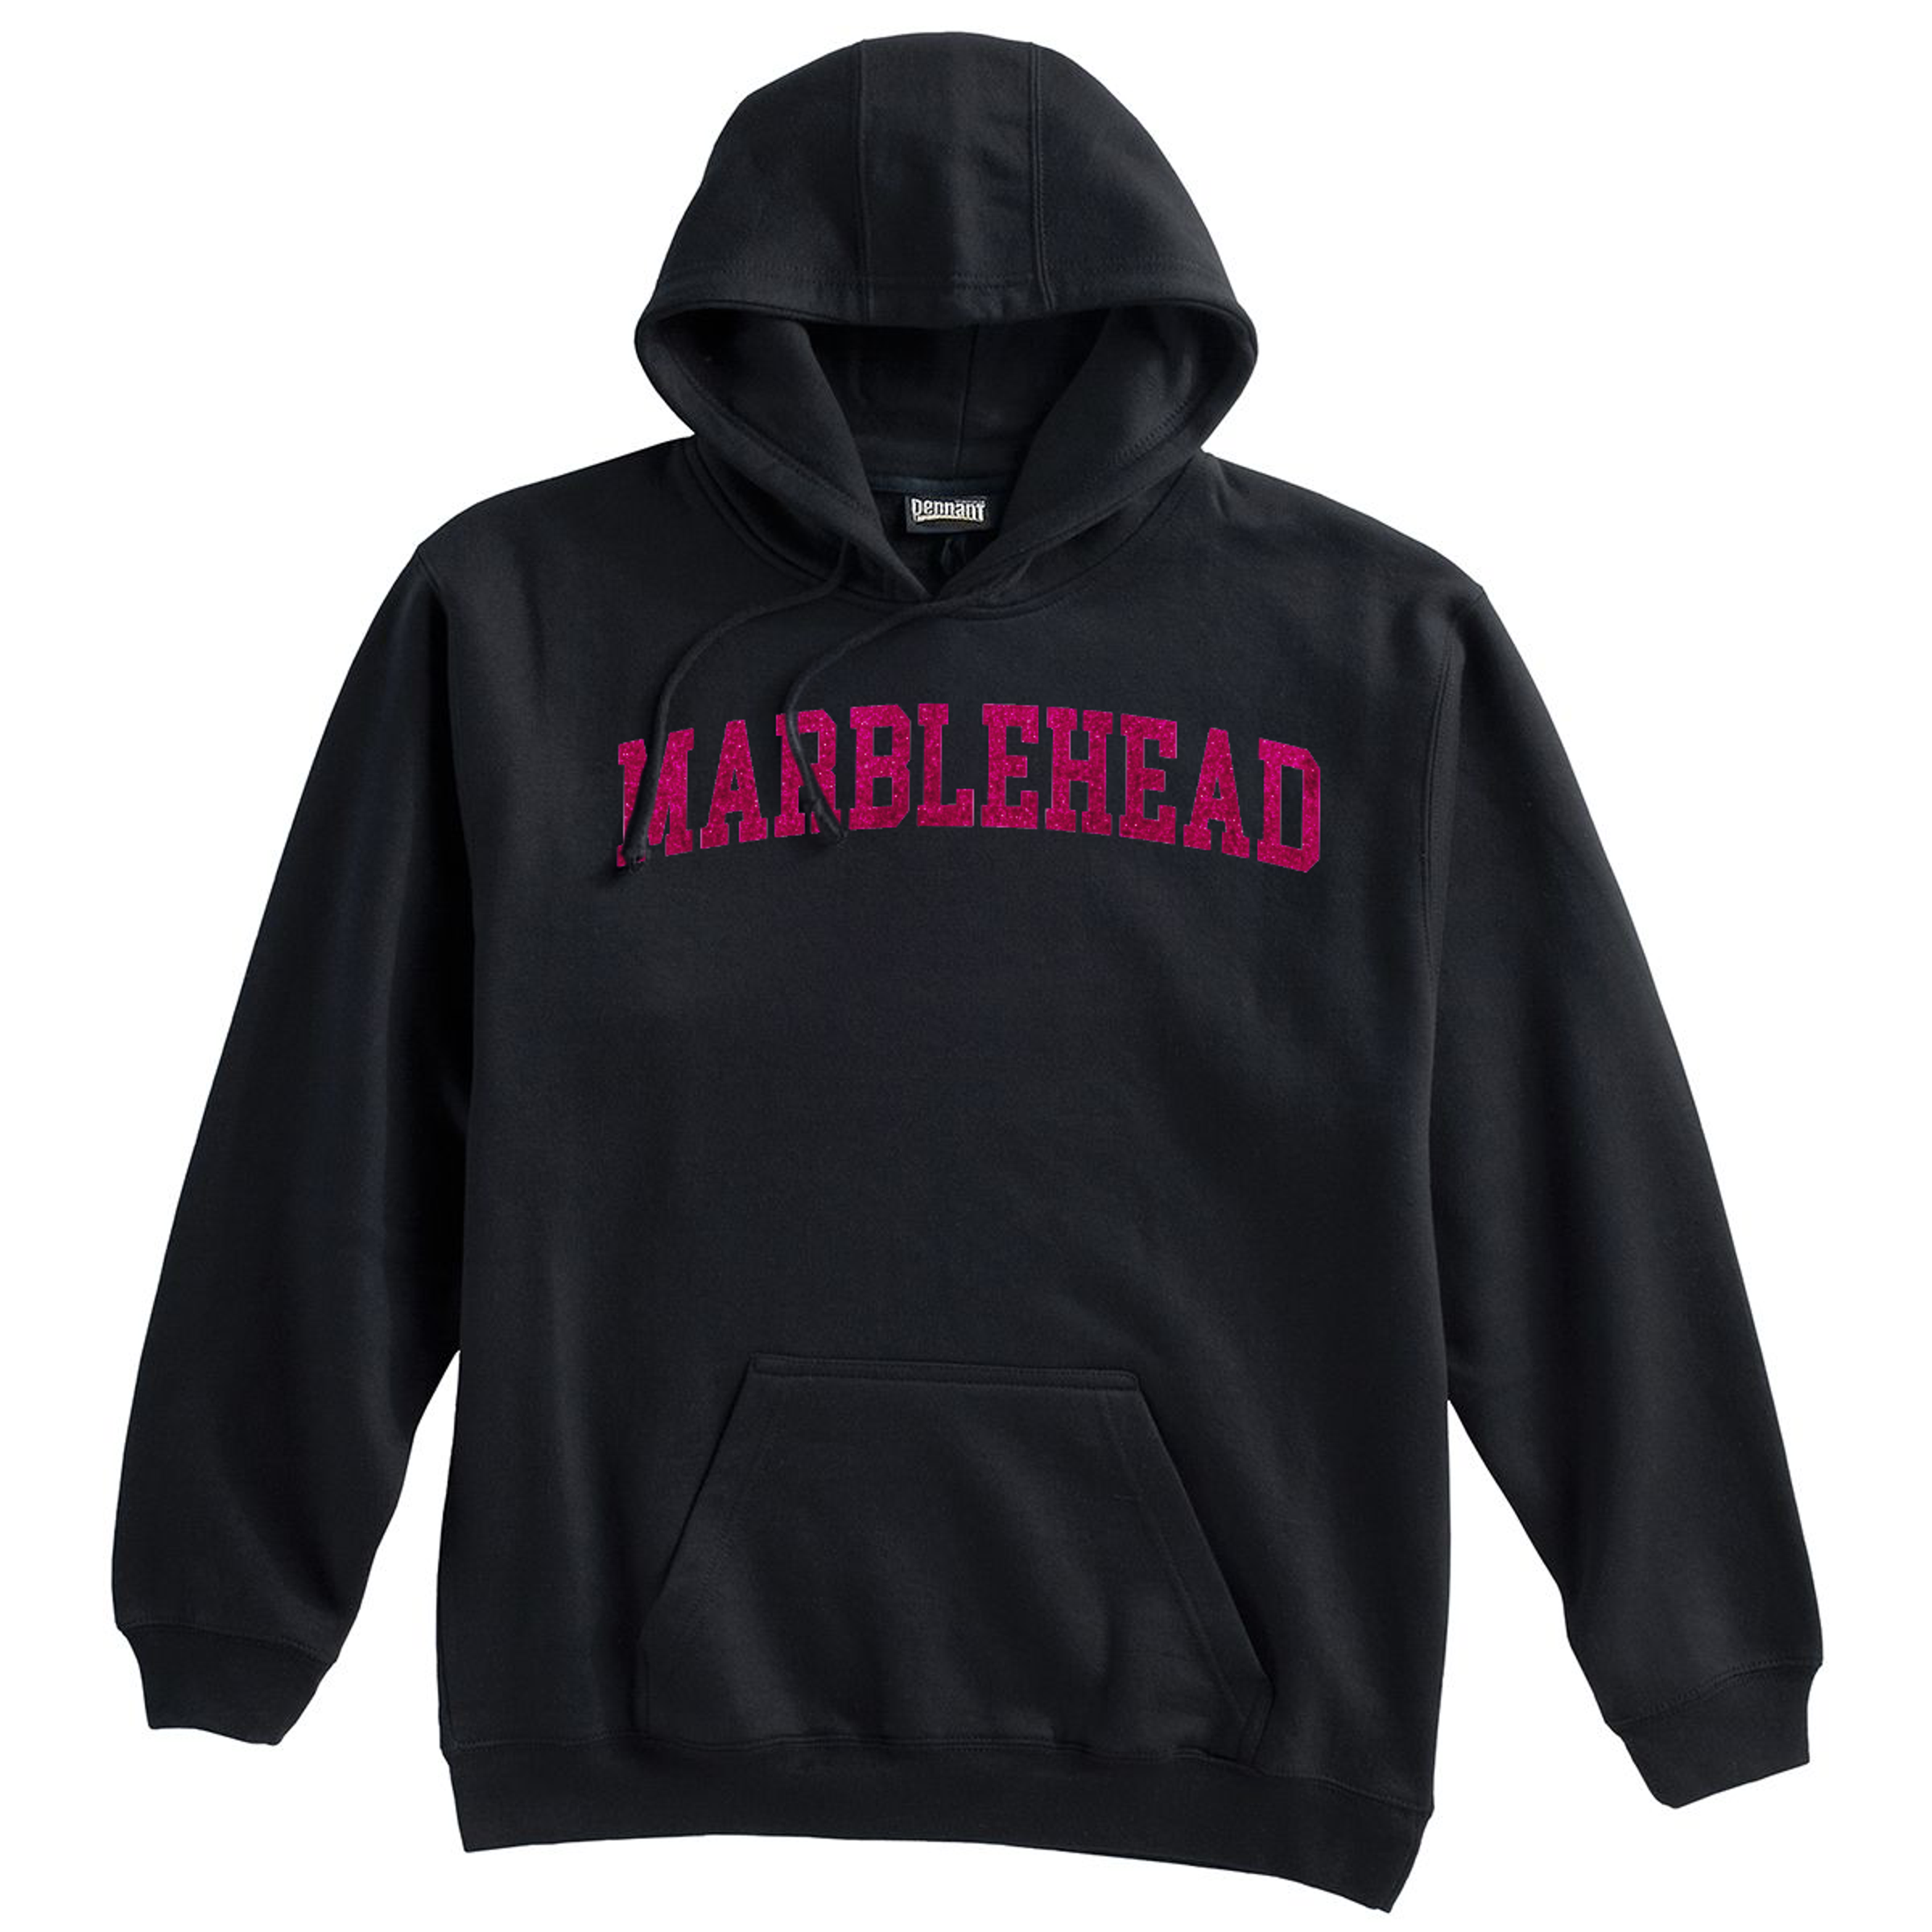 Marblehead Premium Glitter Hoodie